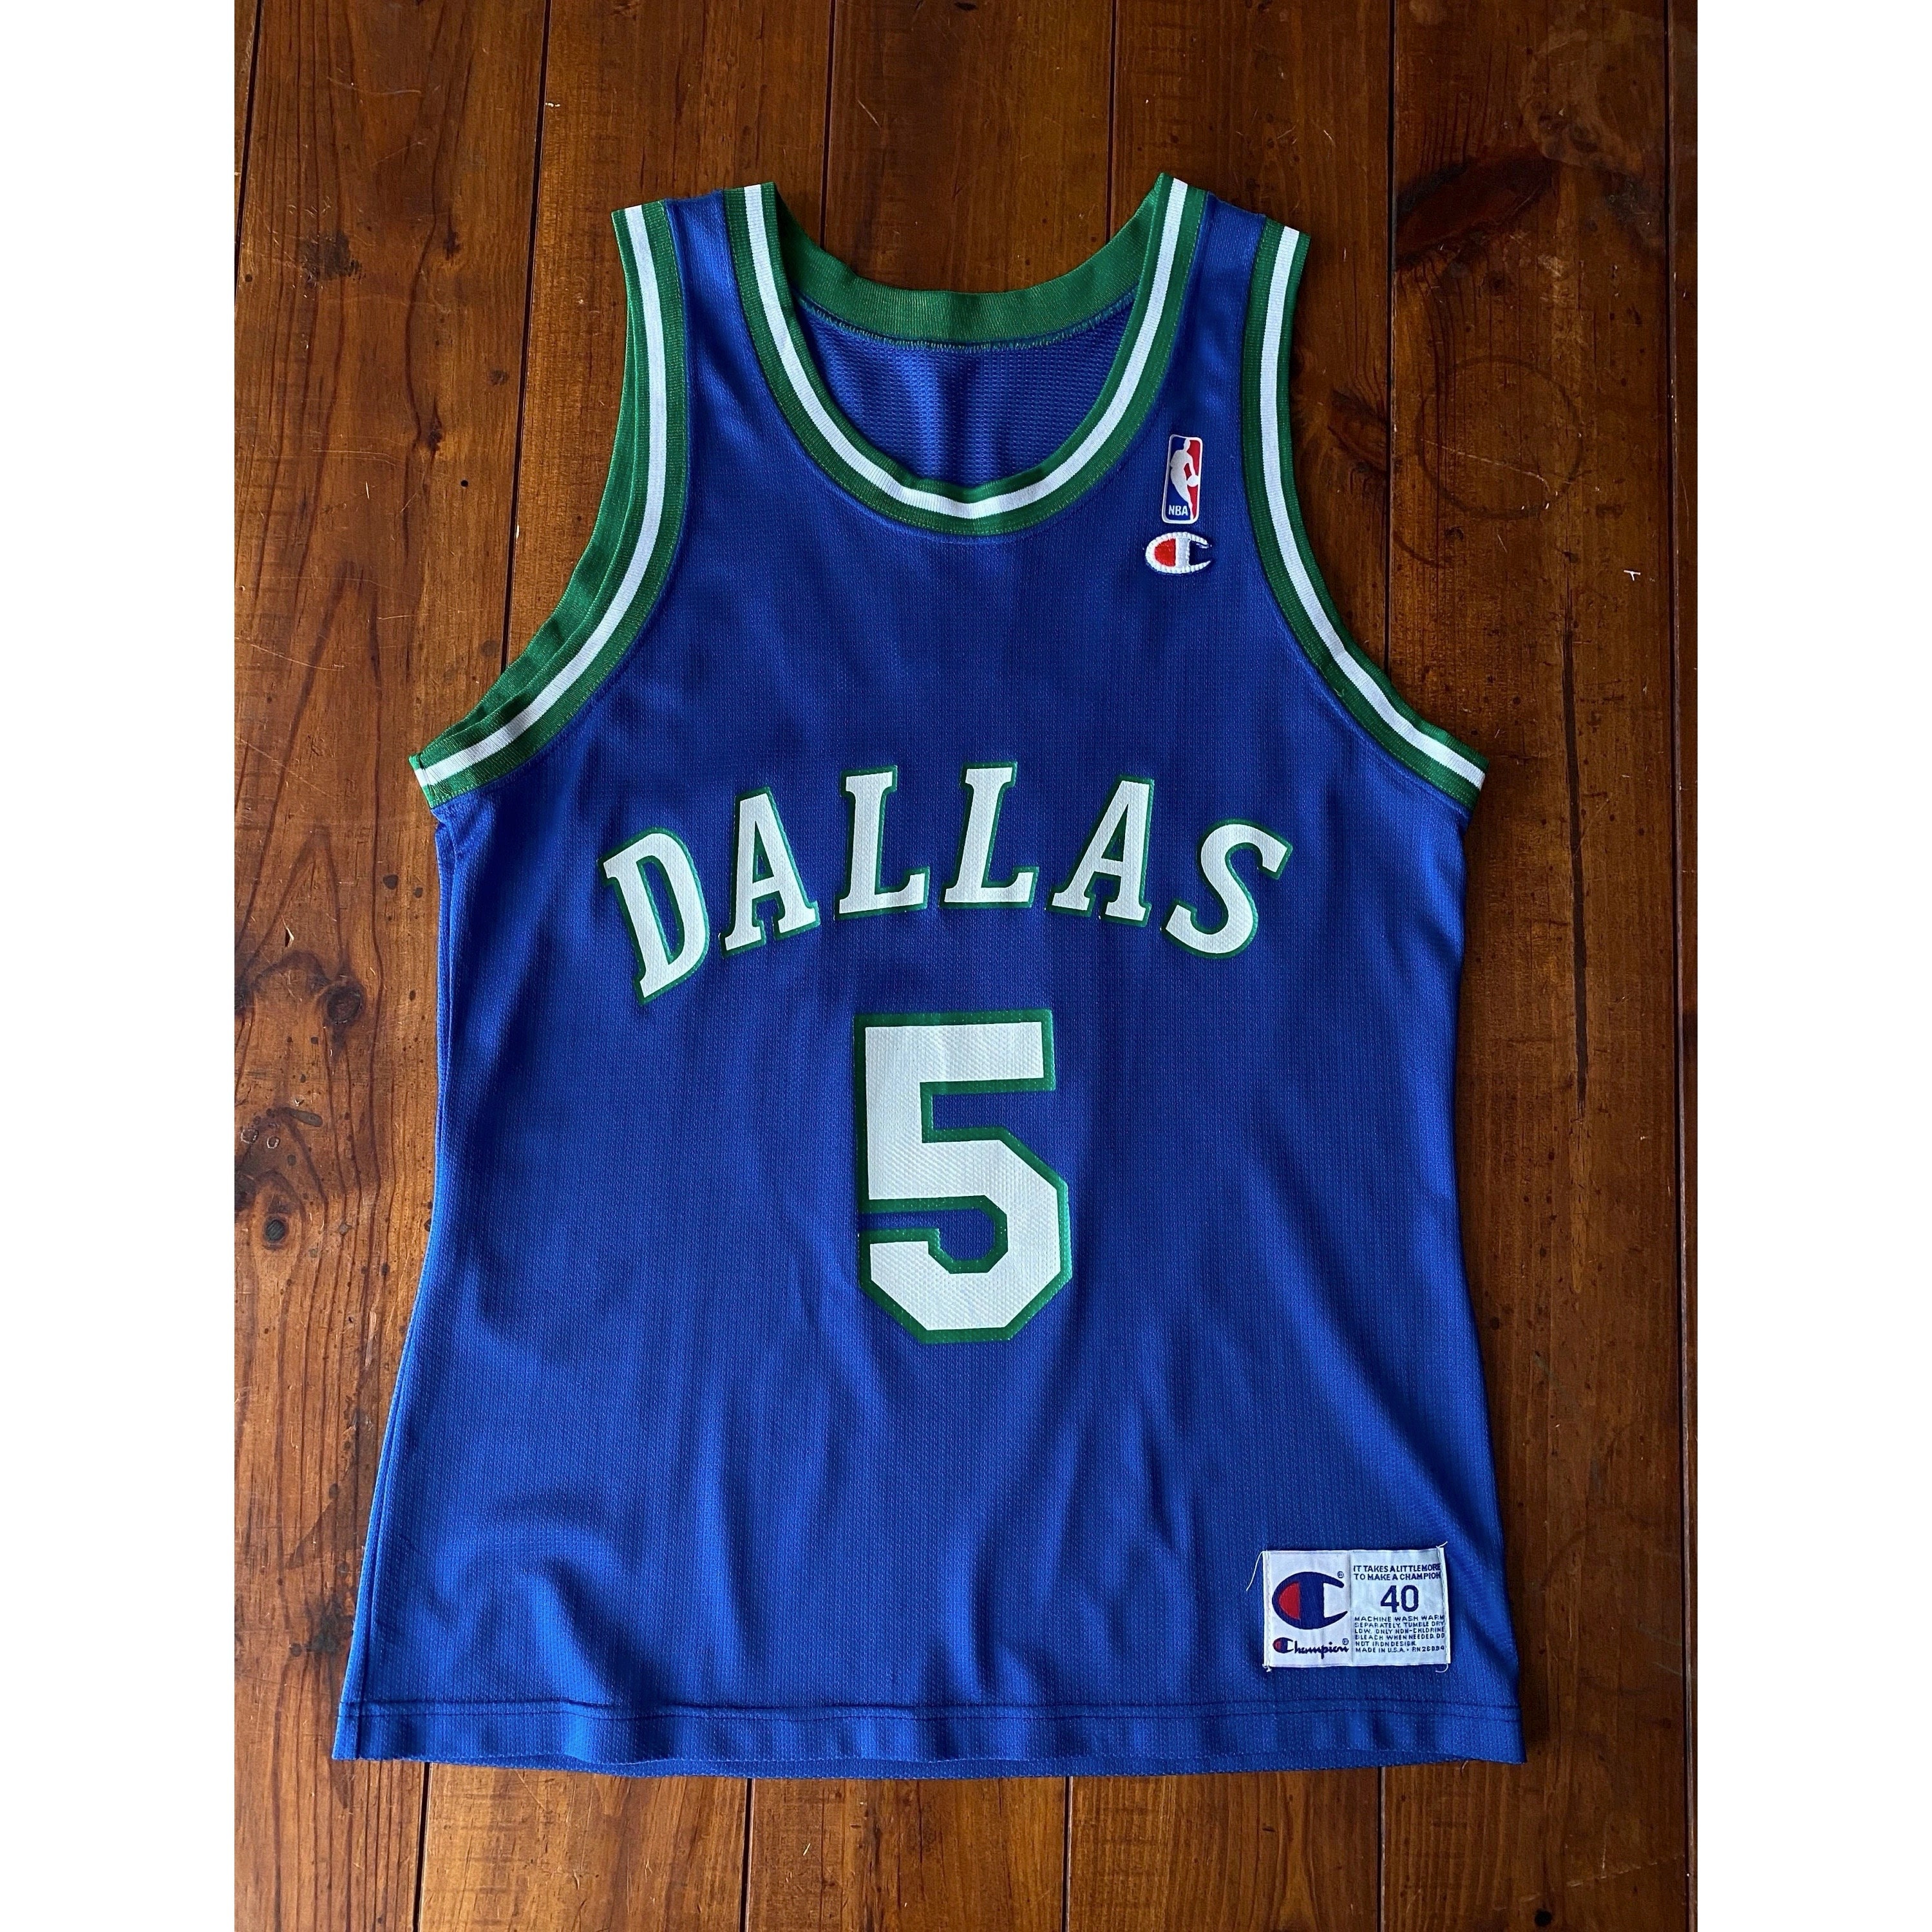 Size 40. VTG 90s NBA Champion Dallas 5 Kidd Jersey Made in 